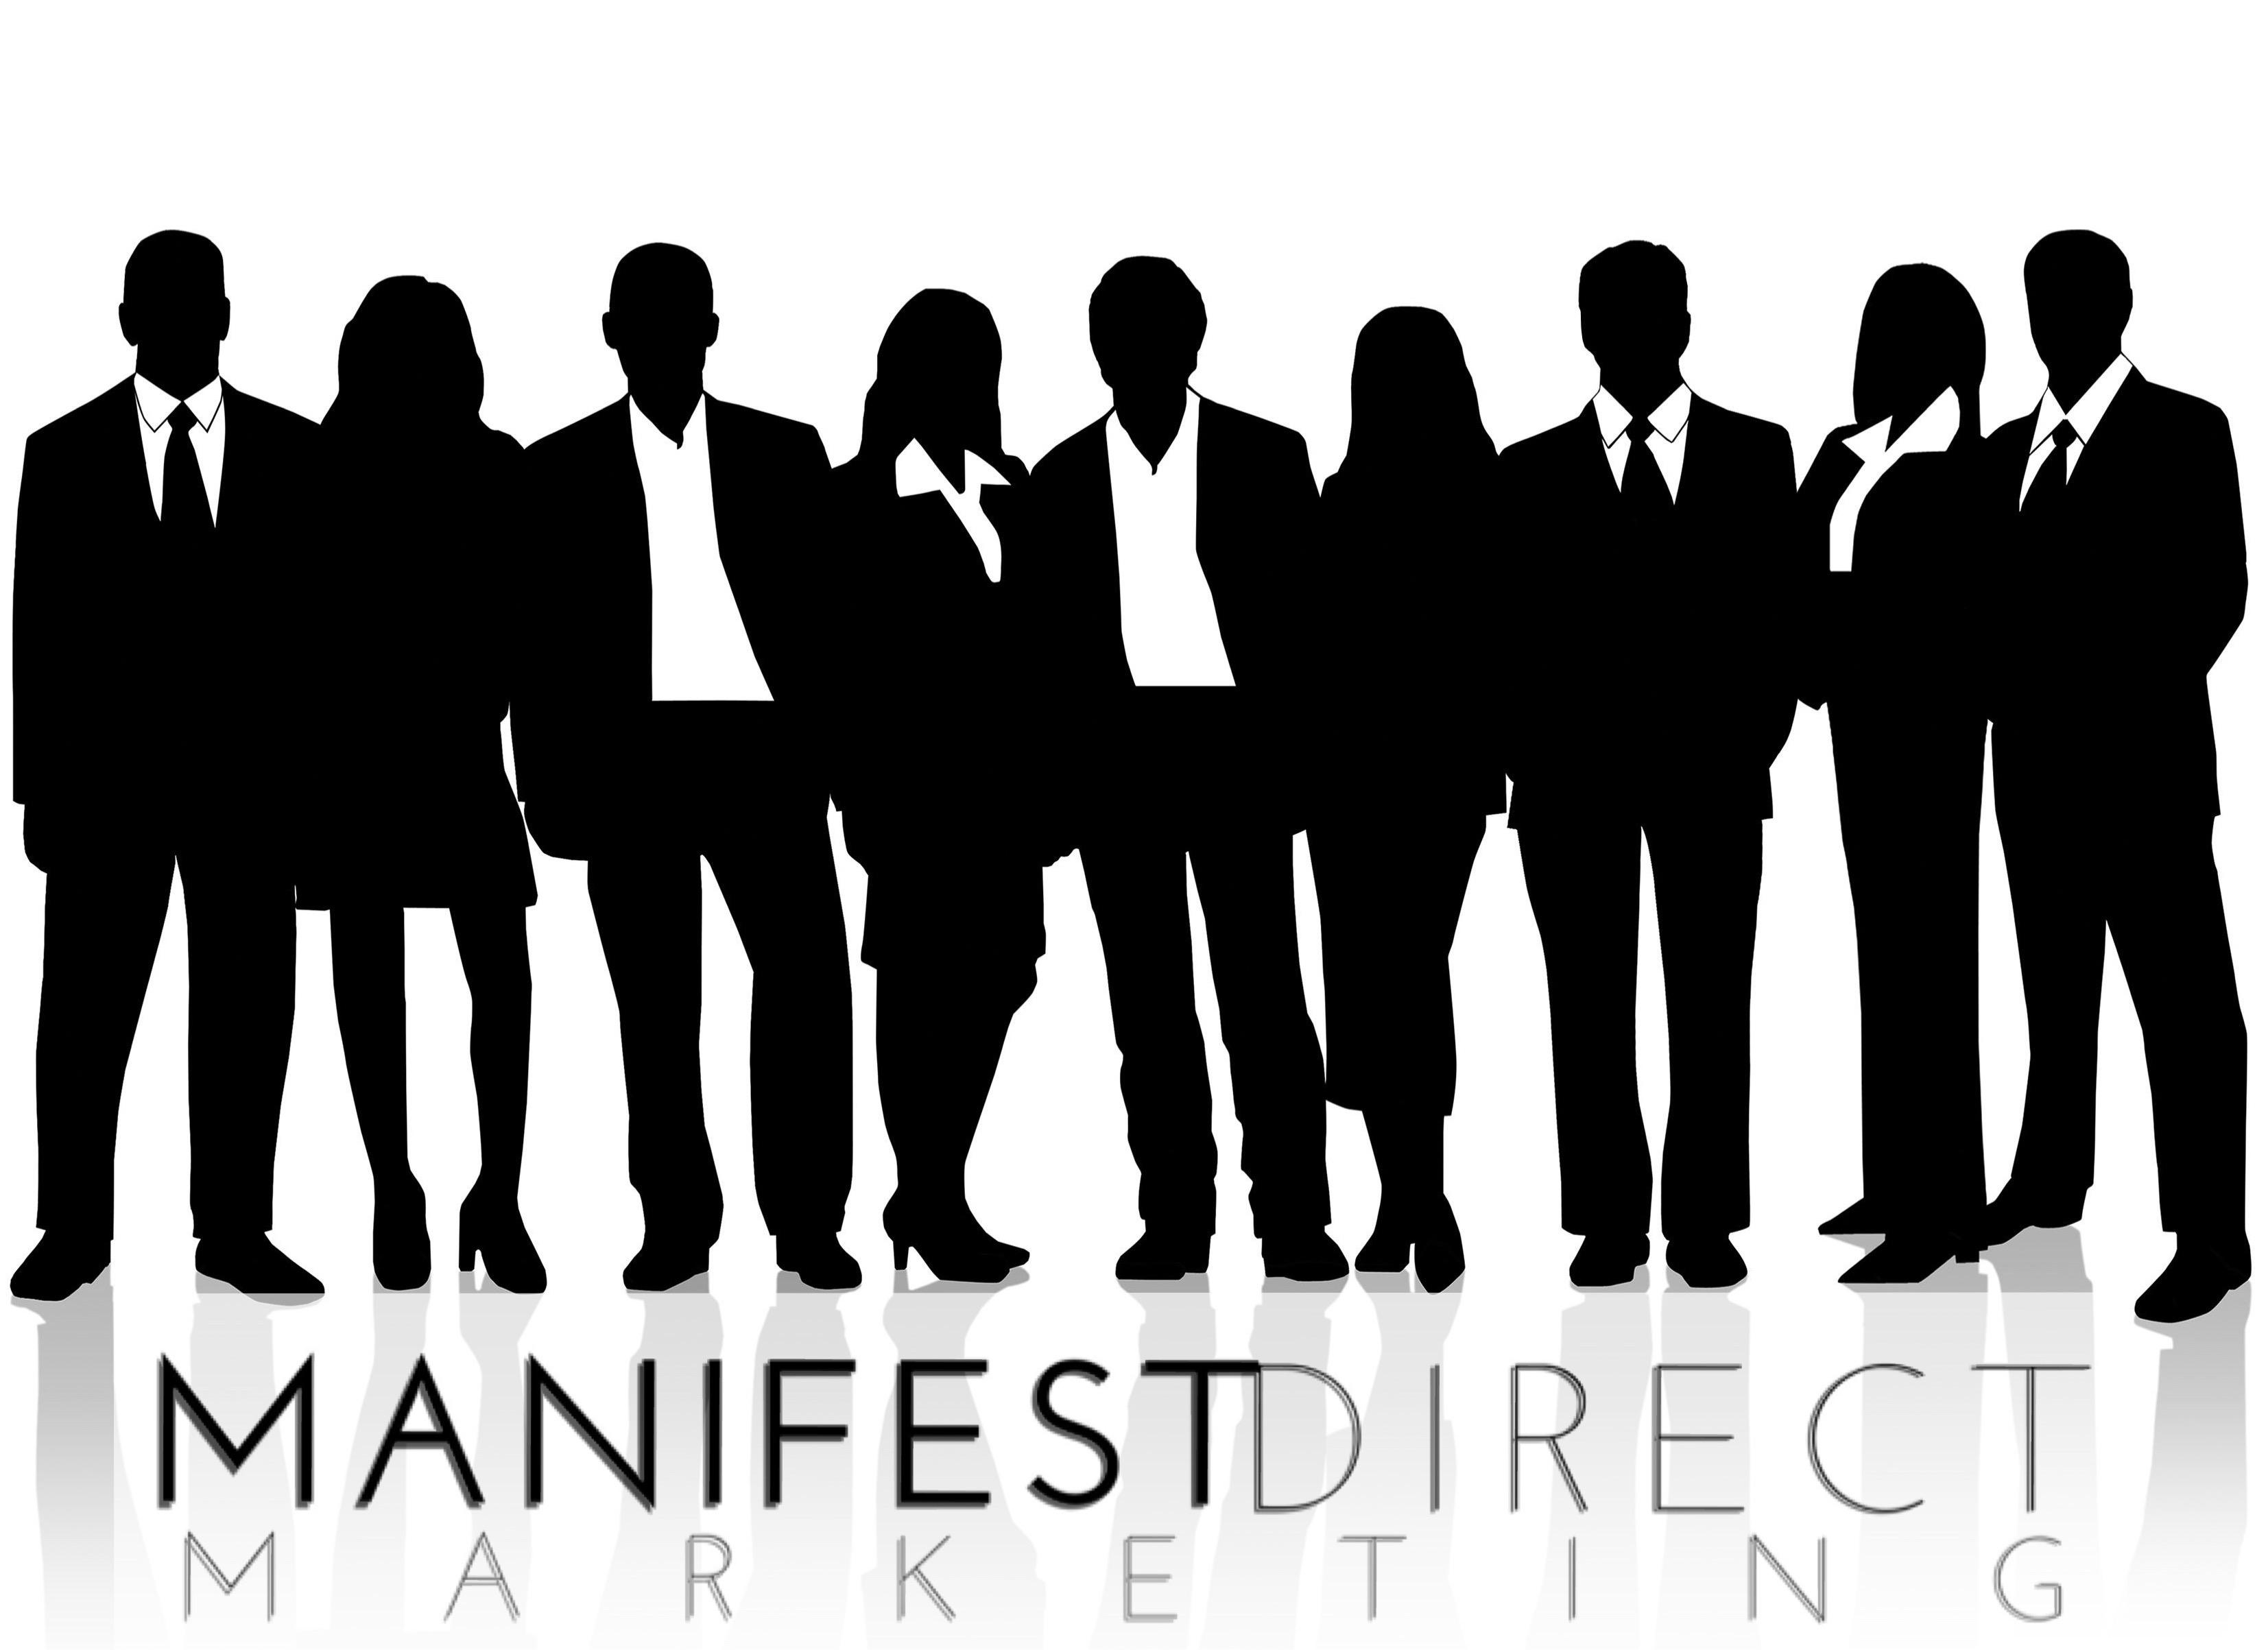 Manifest Direct Marketing, LLC profile on Qualified.One